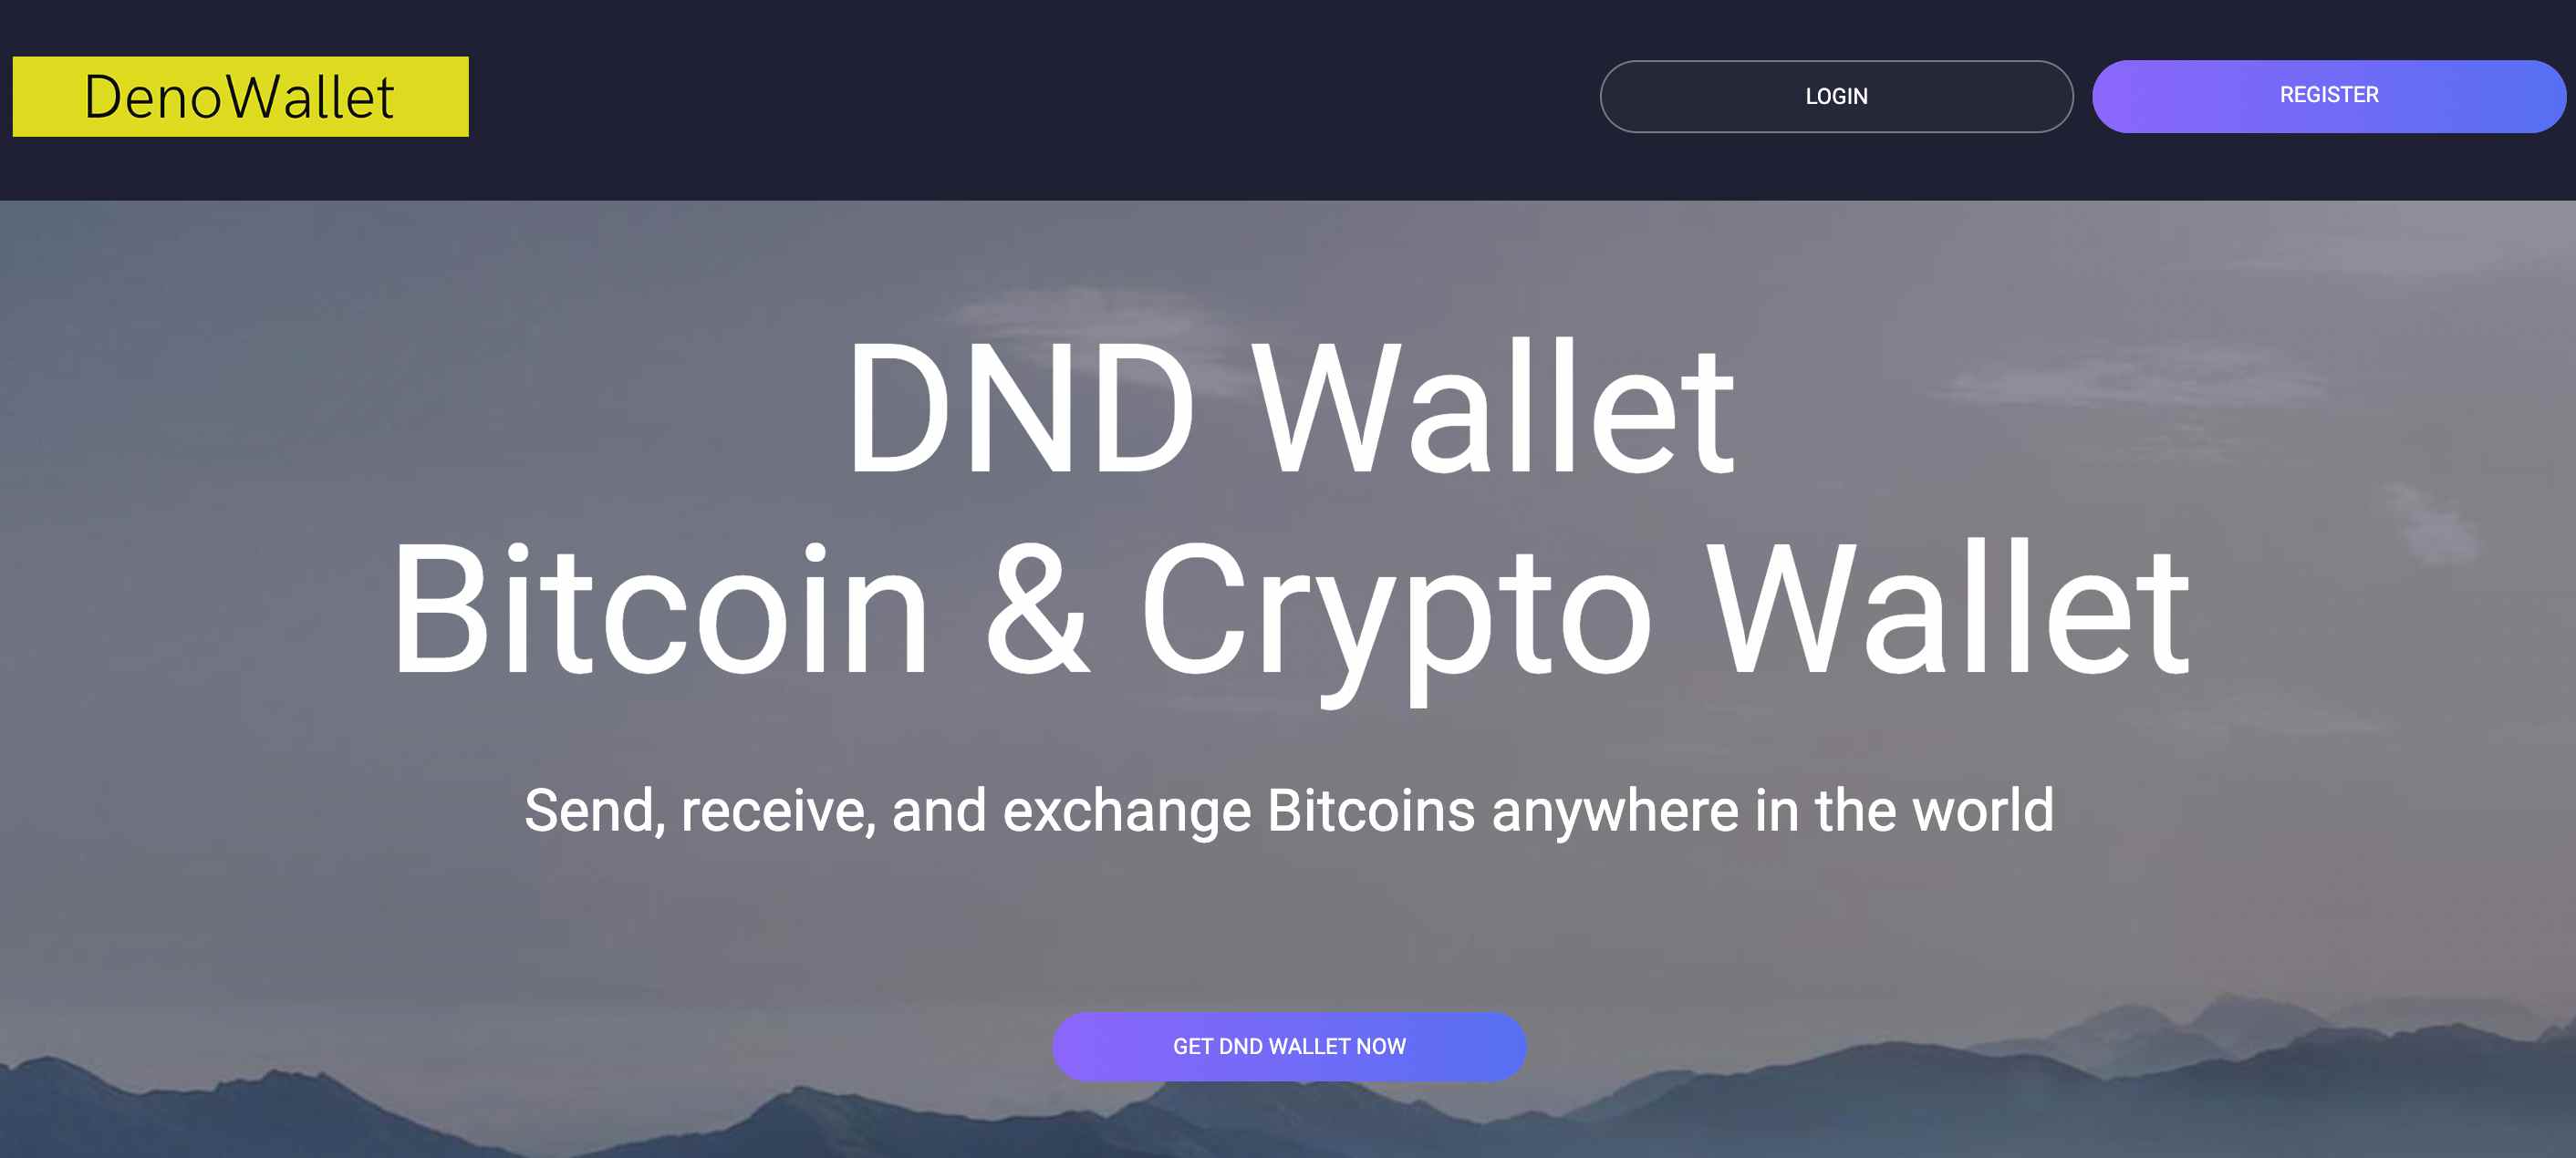 DND Wallet